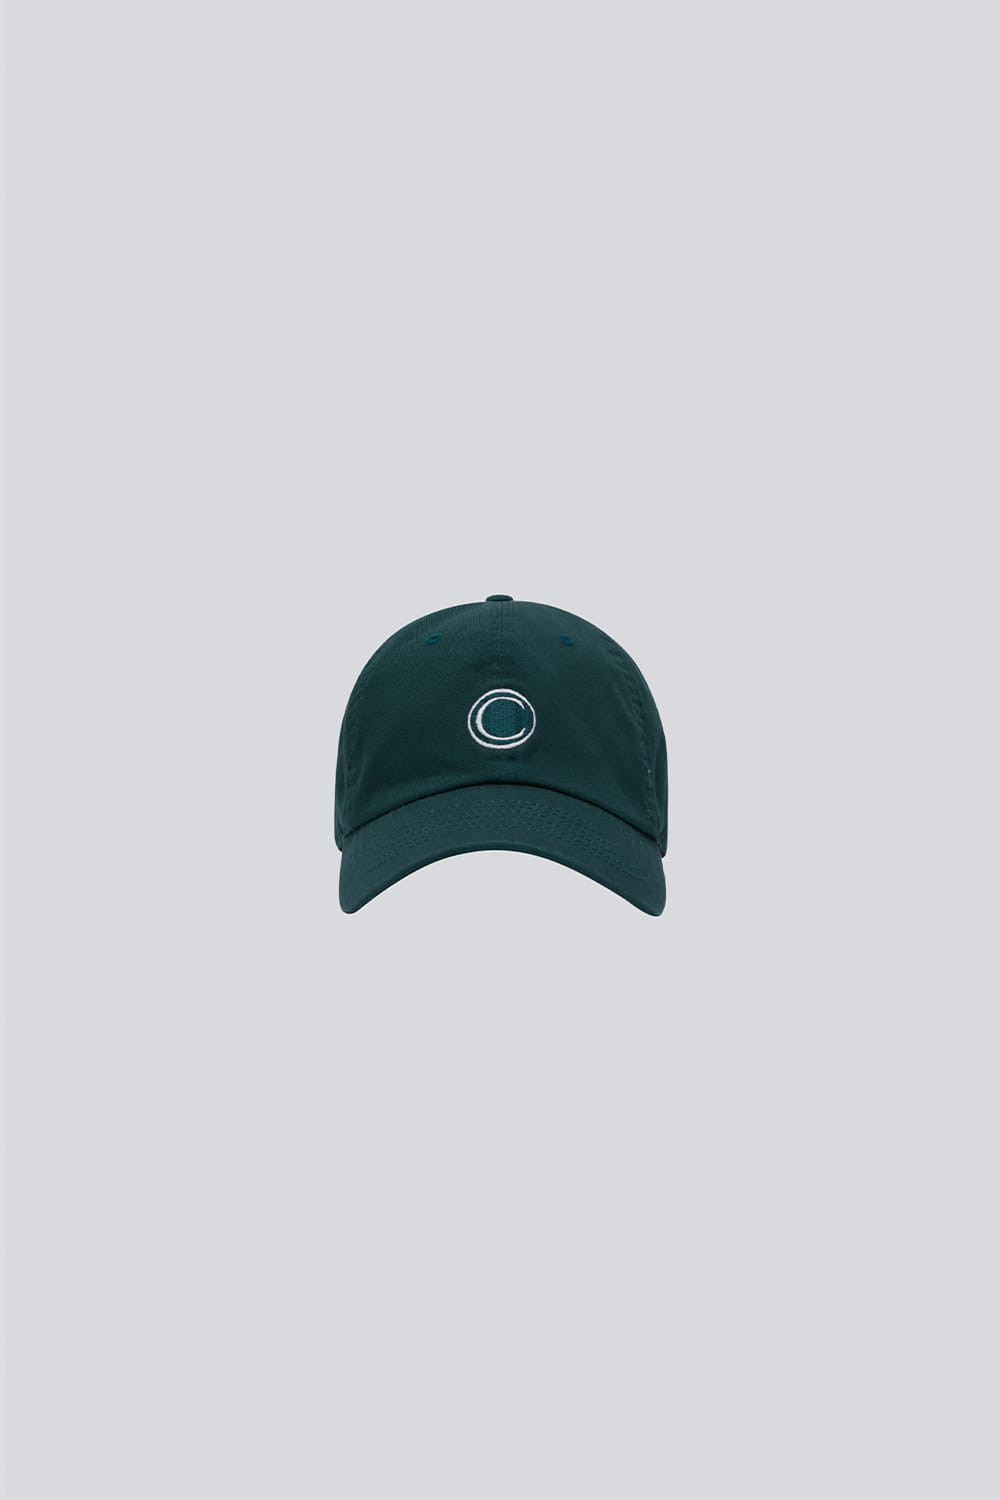 C-logo ball cap_green